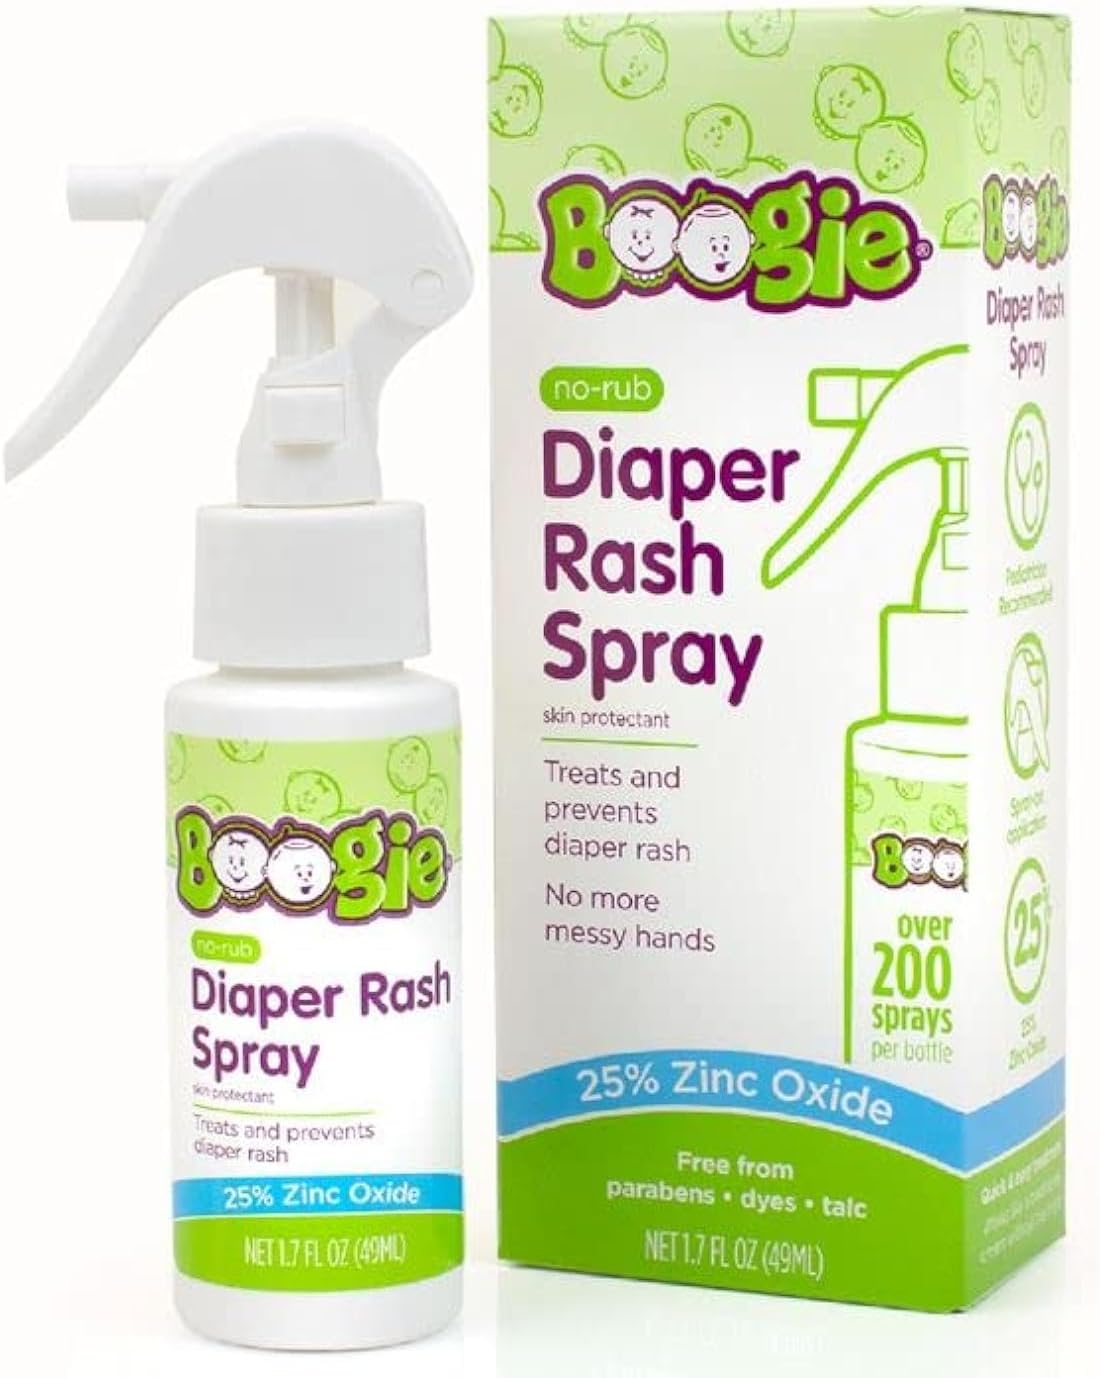 Diaper Rash Cream Spray by Boogie Bottoms